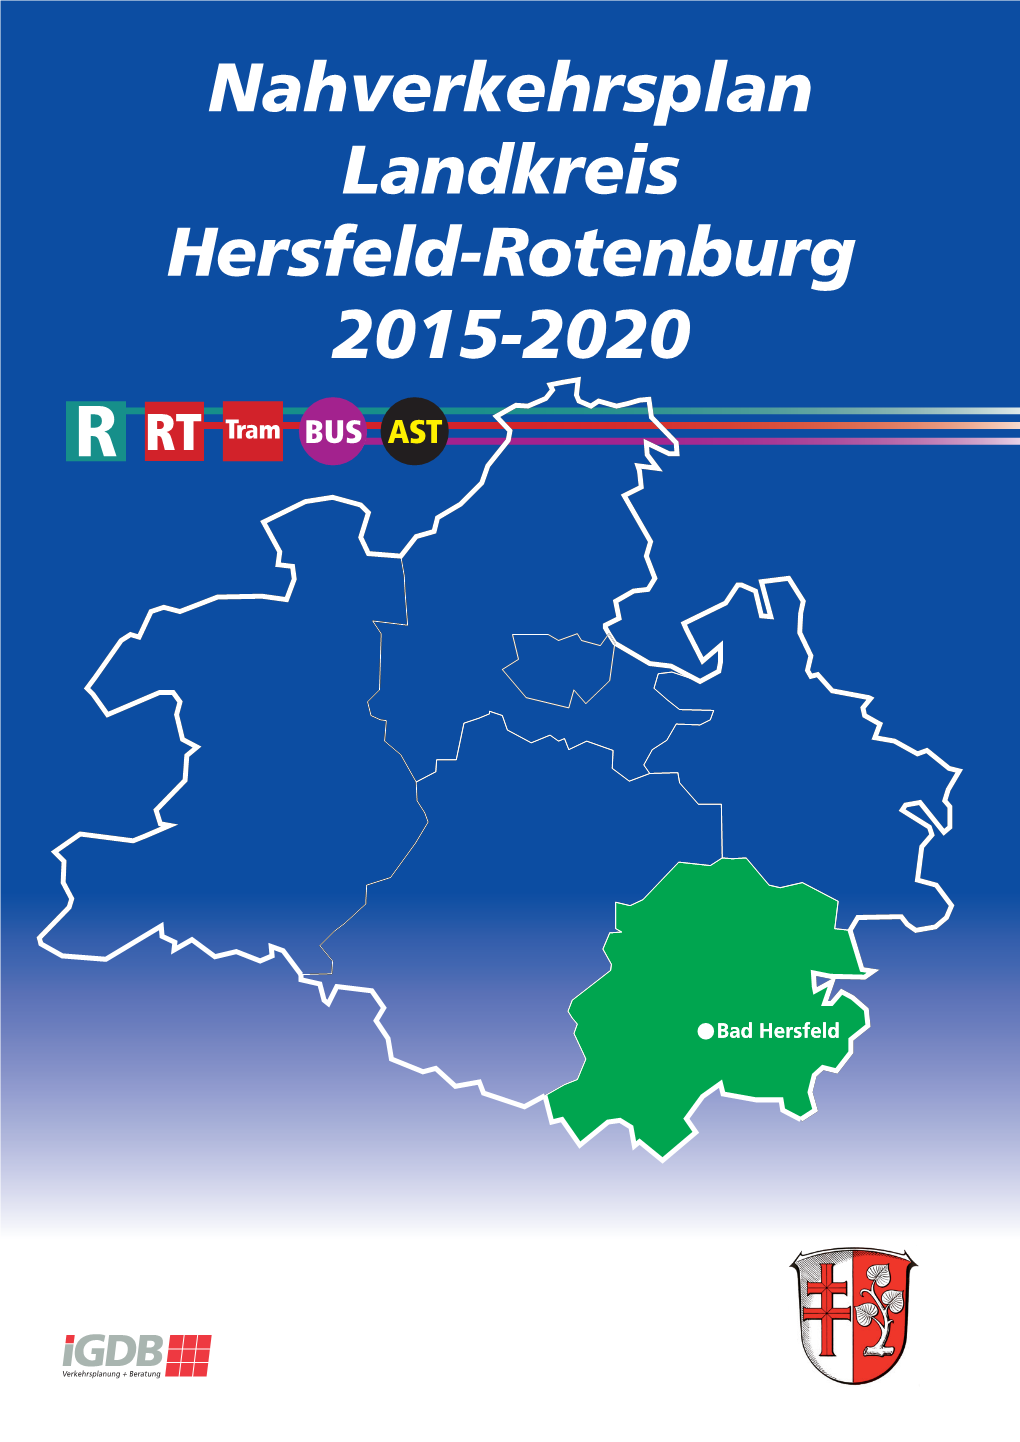 Nahverkehrsplan Landkreis Hersfeld-Rotenburg 2015-2020 RT R 4 T B A